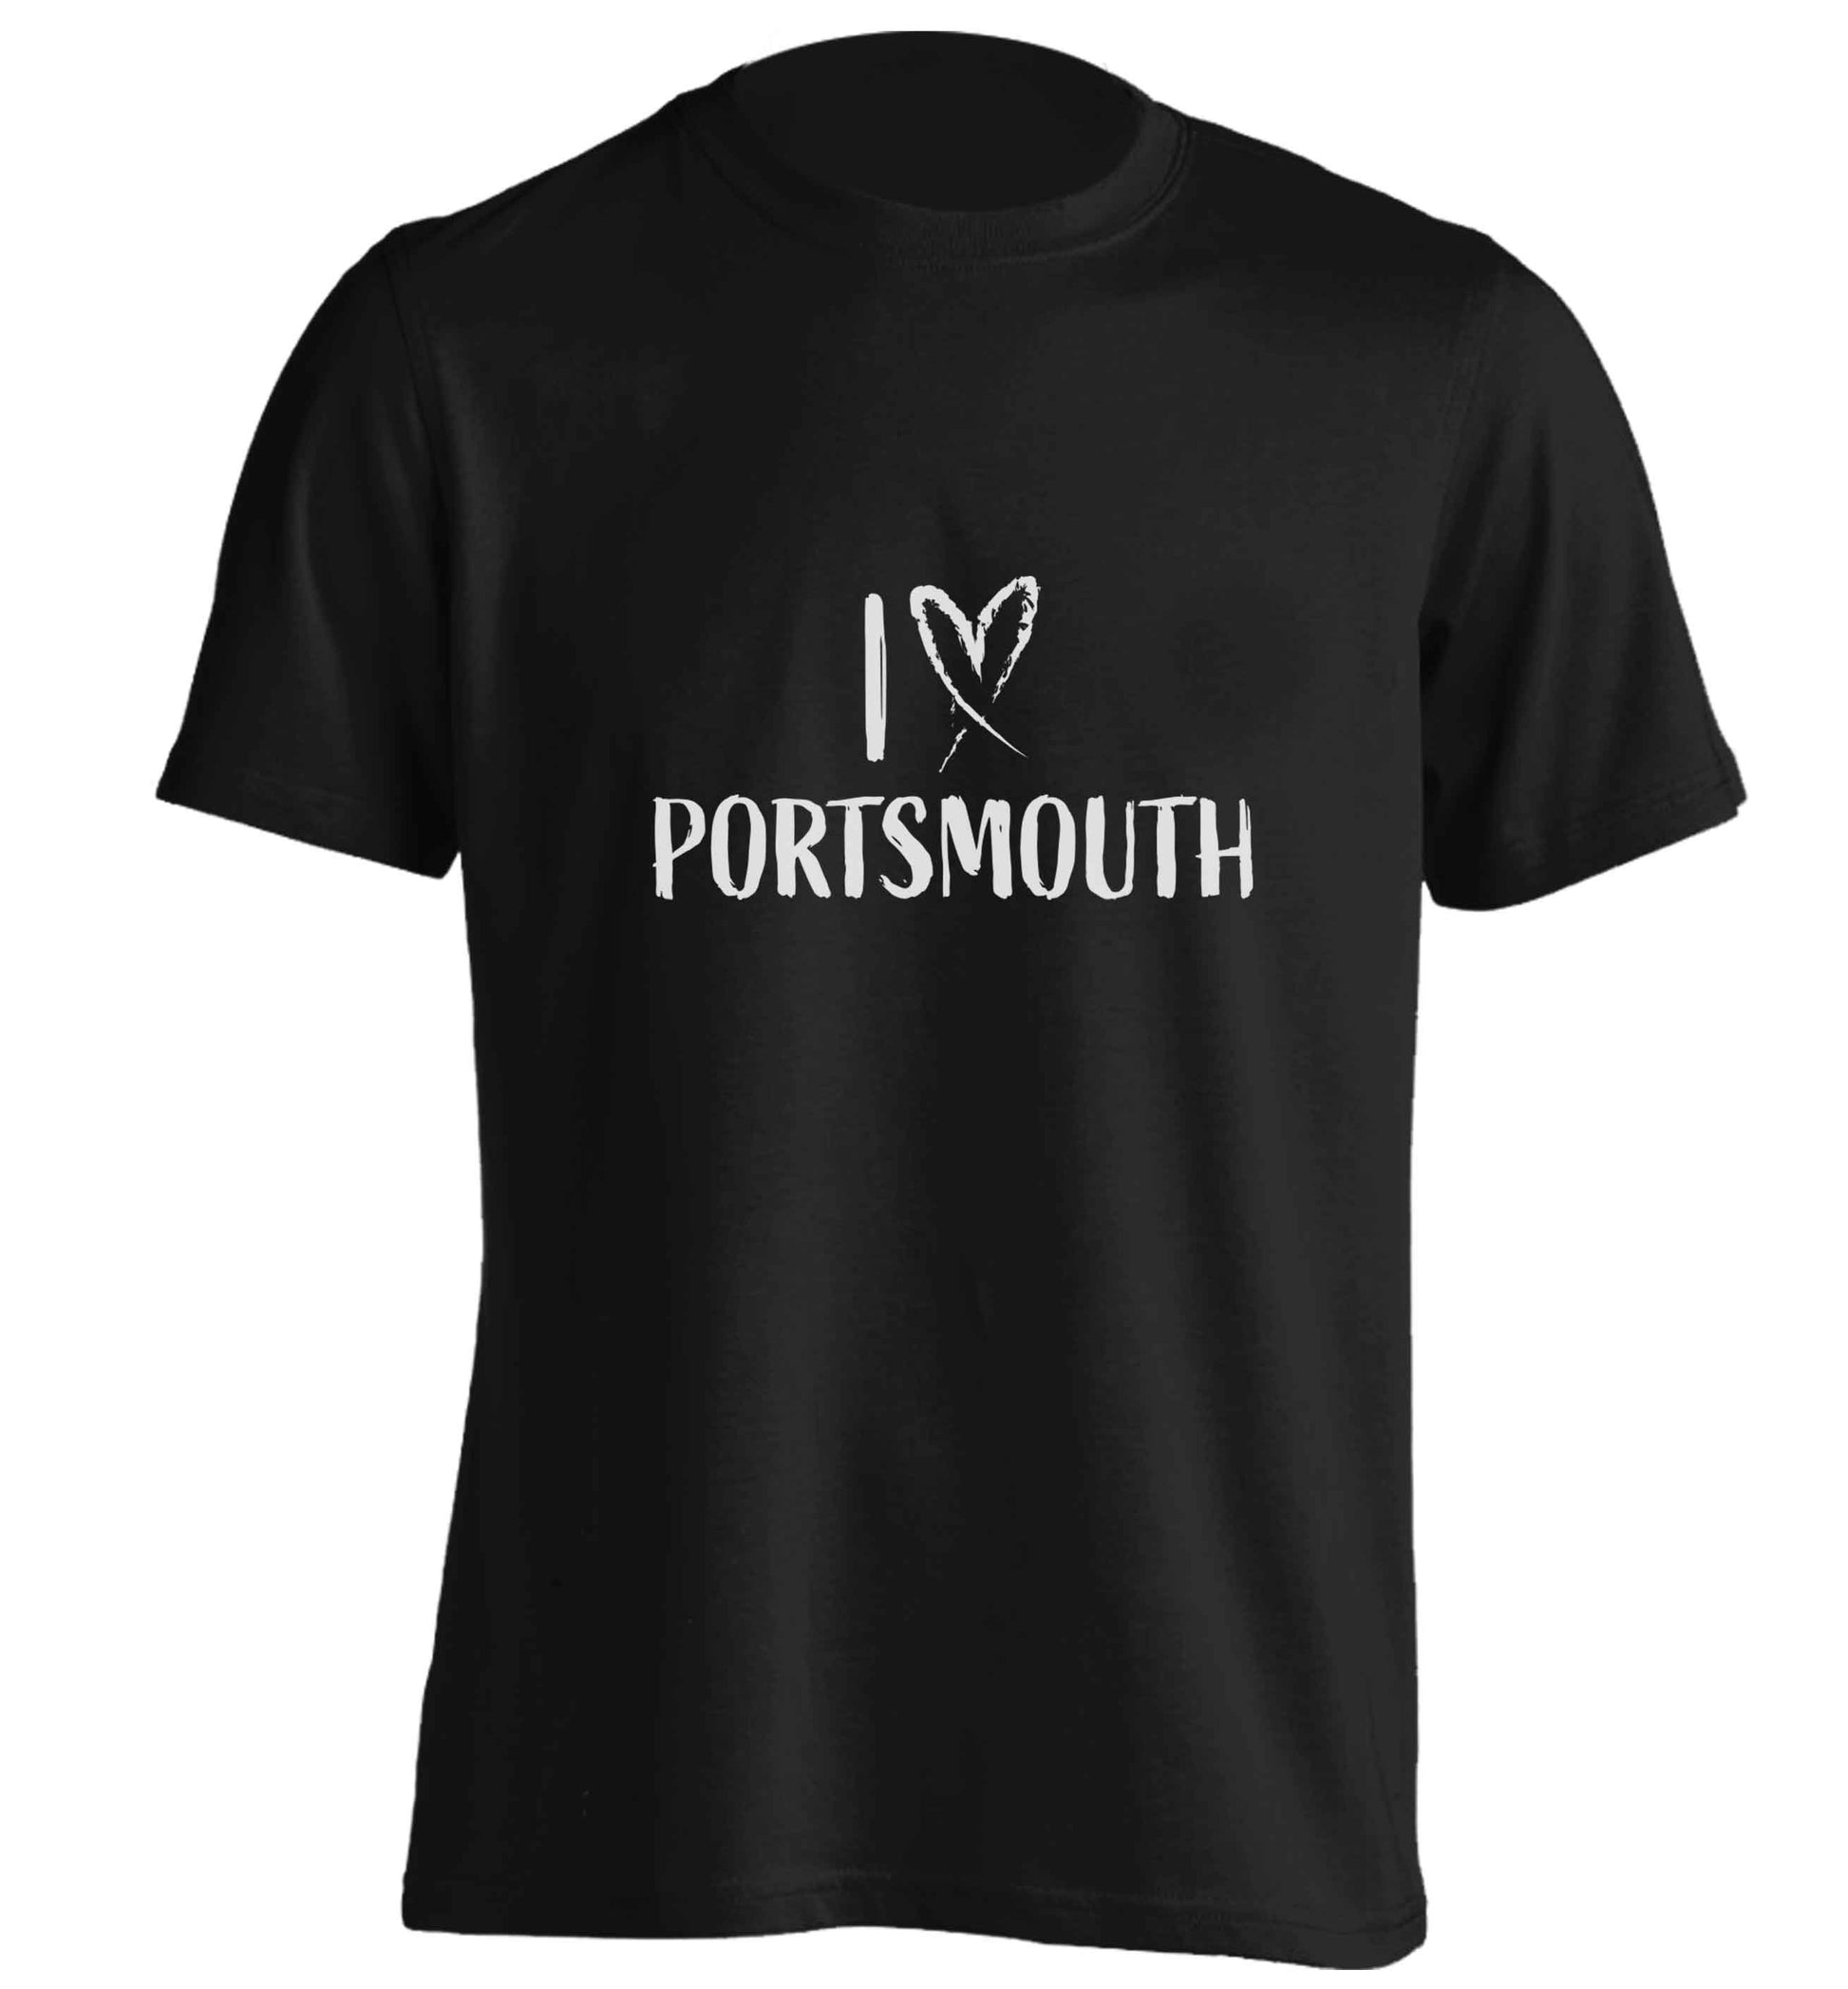 I love Portsmouth adults unisex black Tshirt 2XL